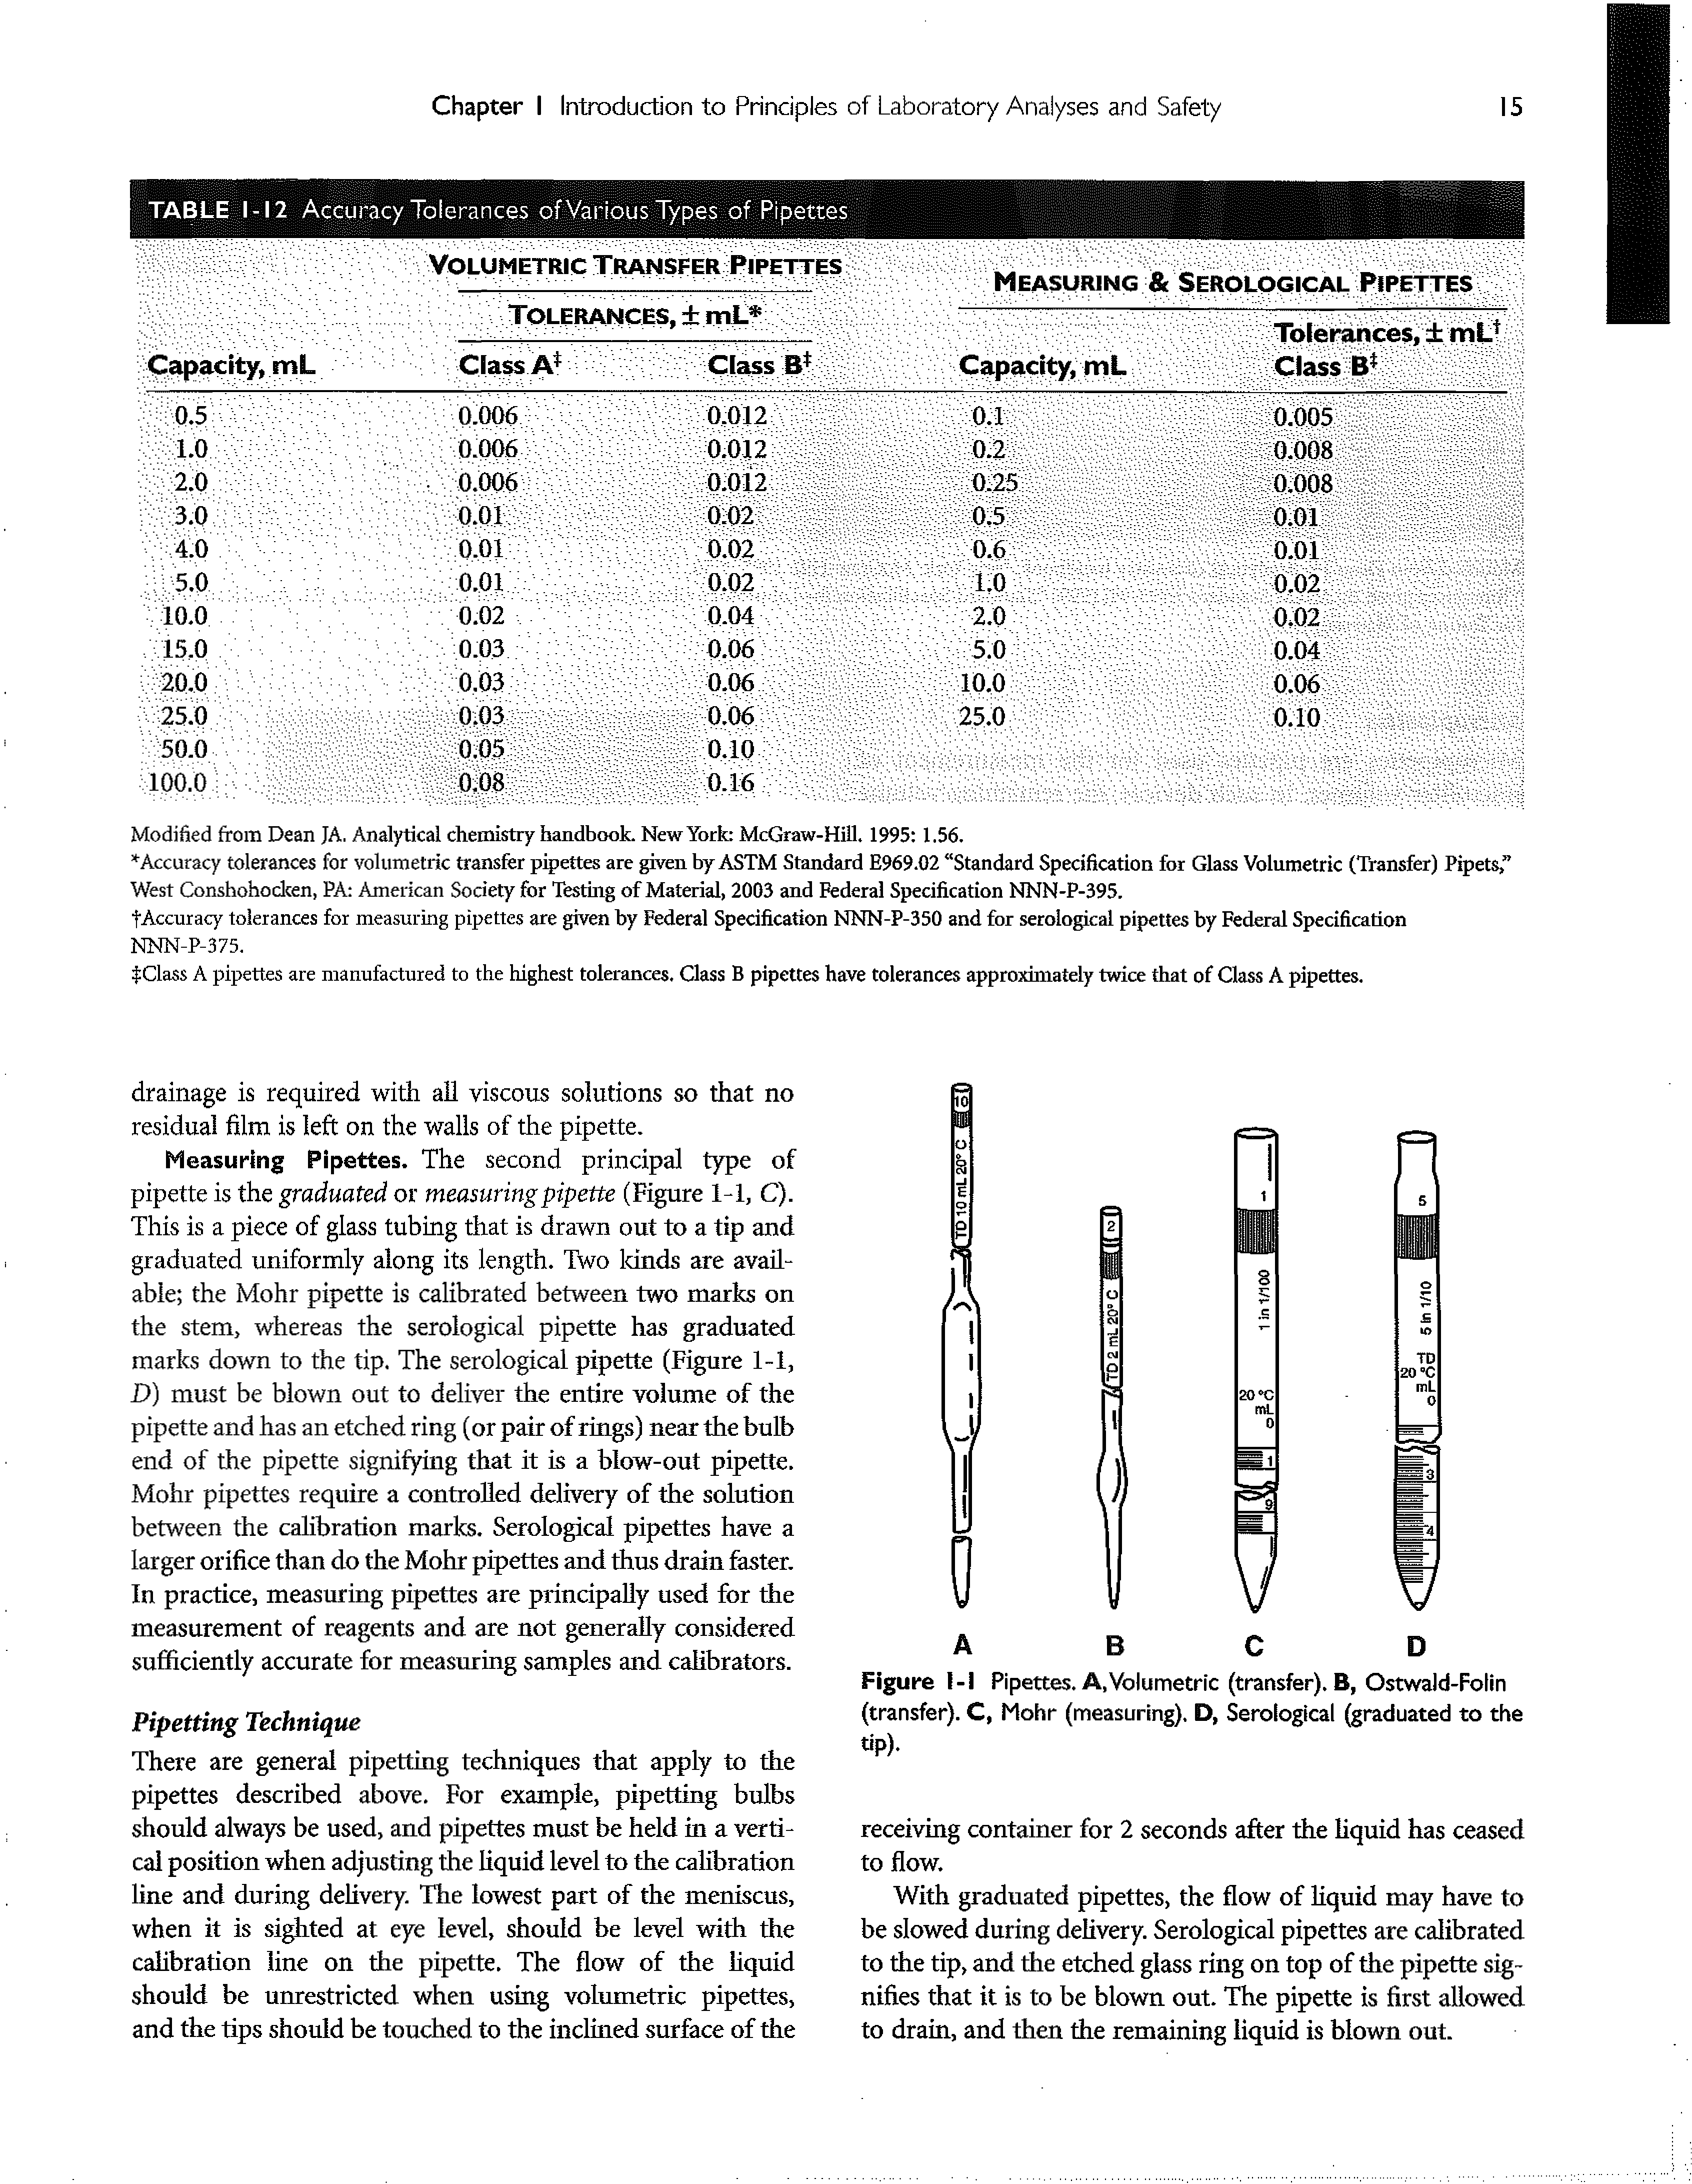 Figure 1-1 Pipettes. A,Volumetric (transfer). B, Ostwald-Folin (transfer). C, Mohr (measuring), D, Serological (graduated to the tip).